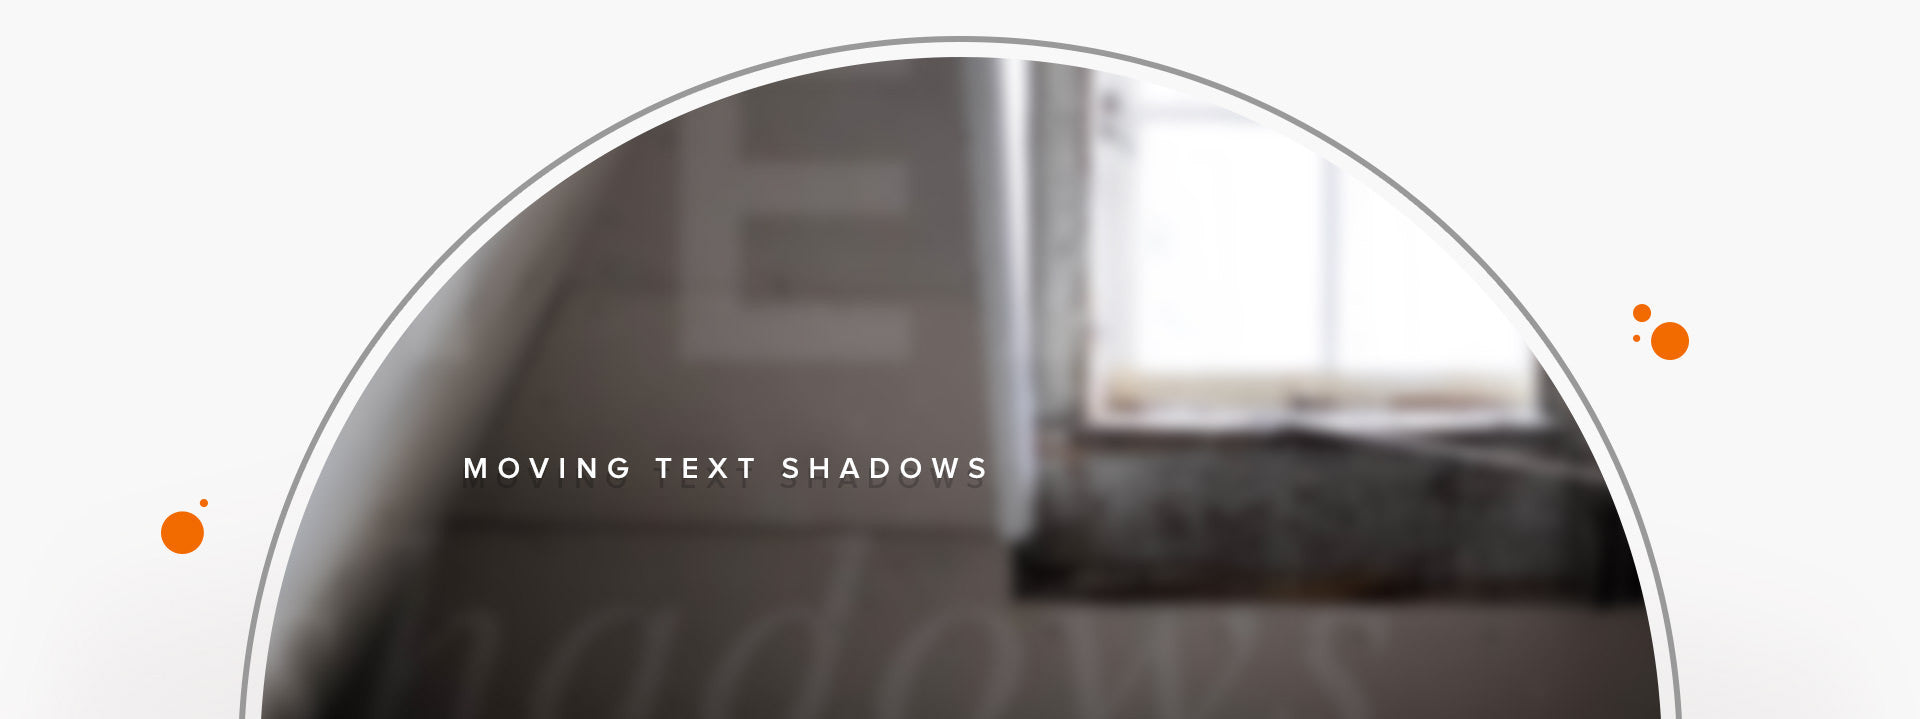 Moving Text Shadows